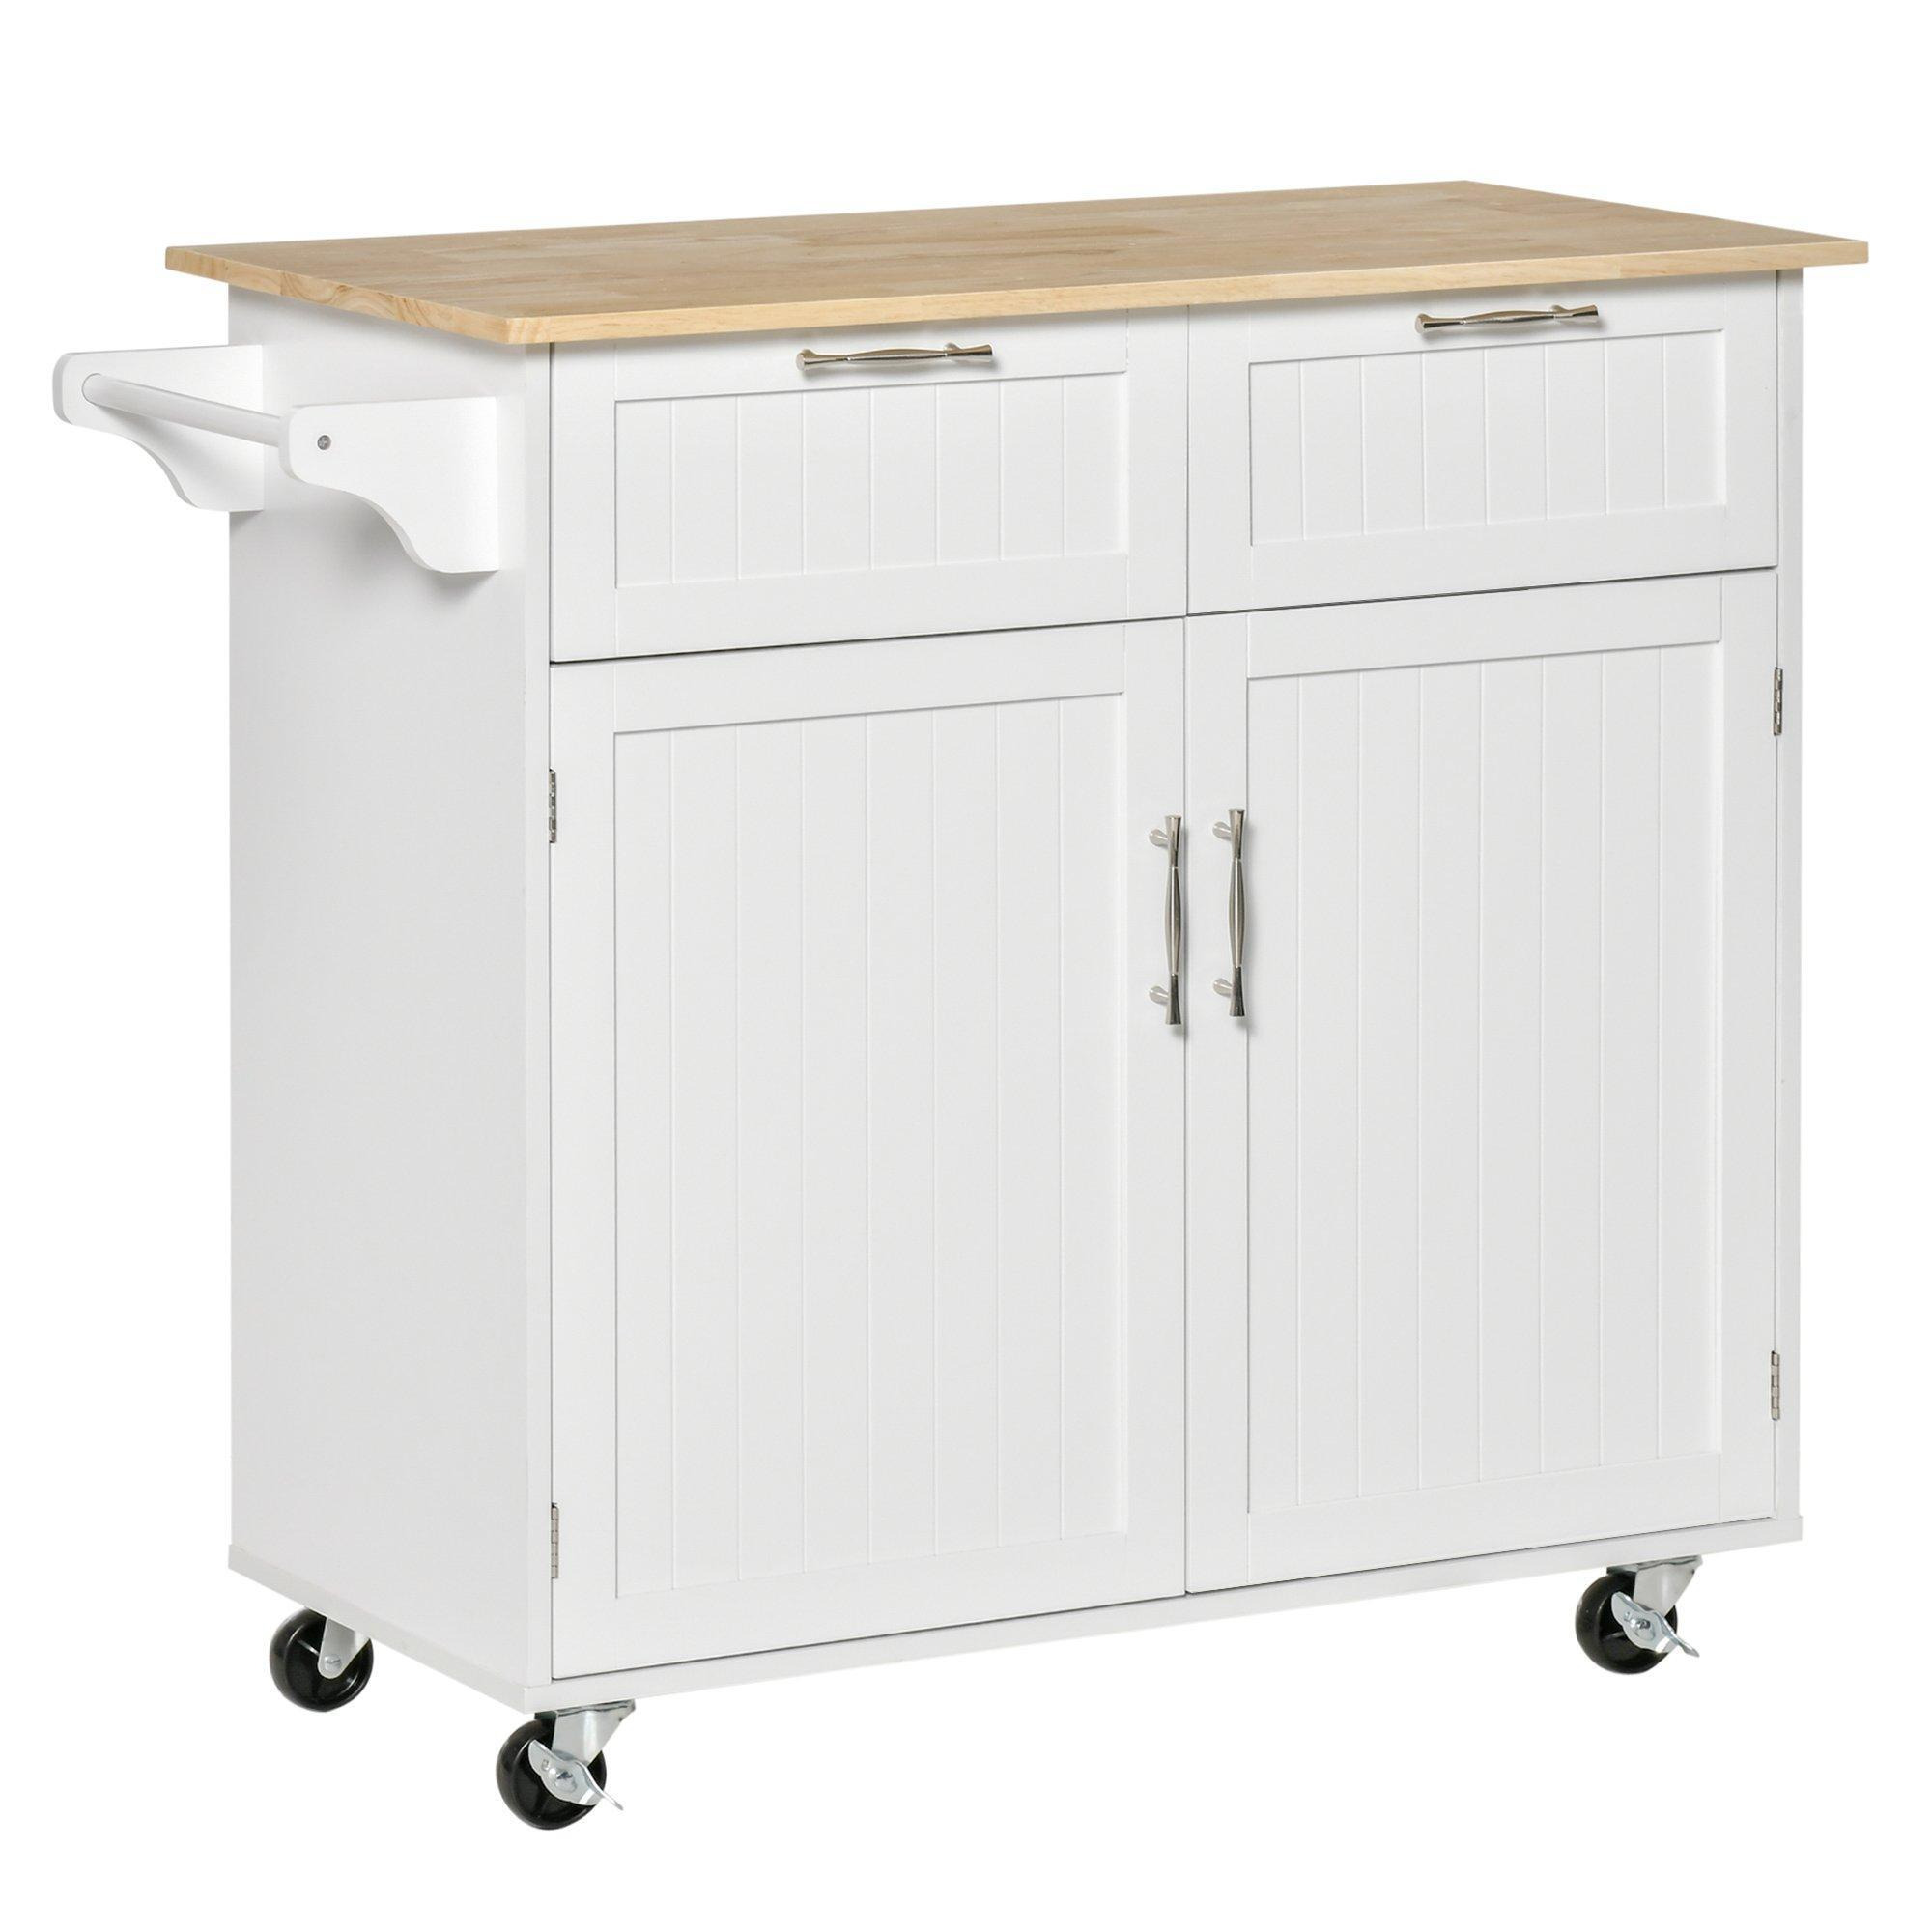 Rolling Kitchen Island Storage Kitchen Cart with Adjustable Shelves - image 1